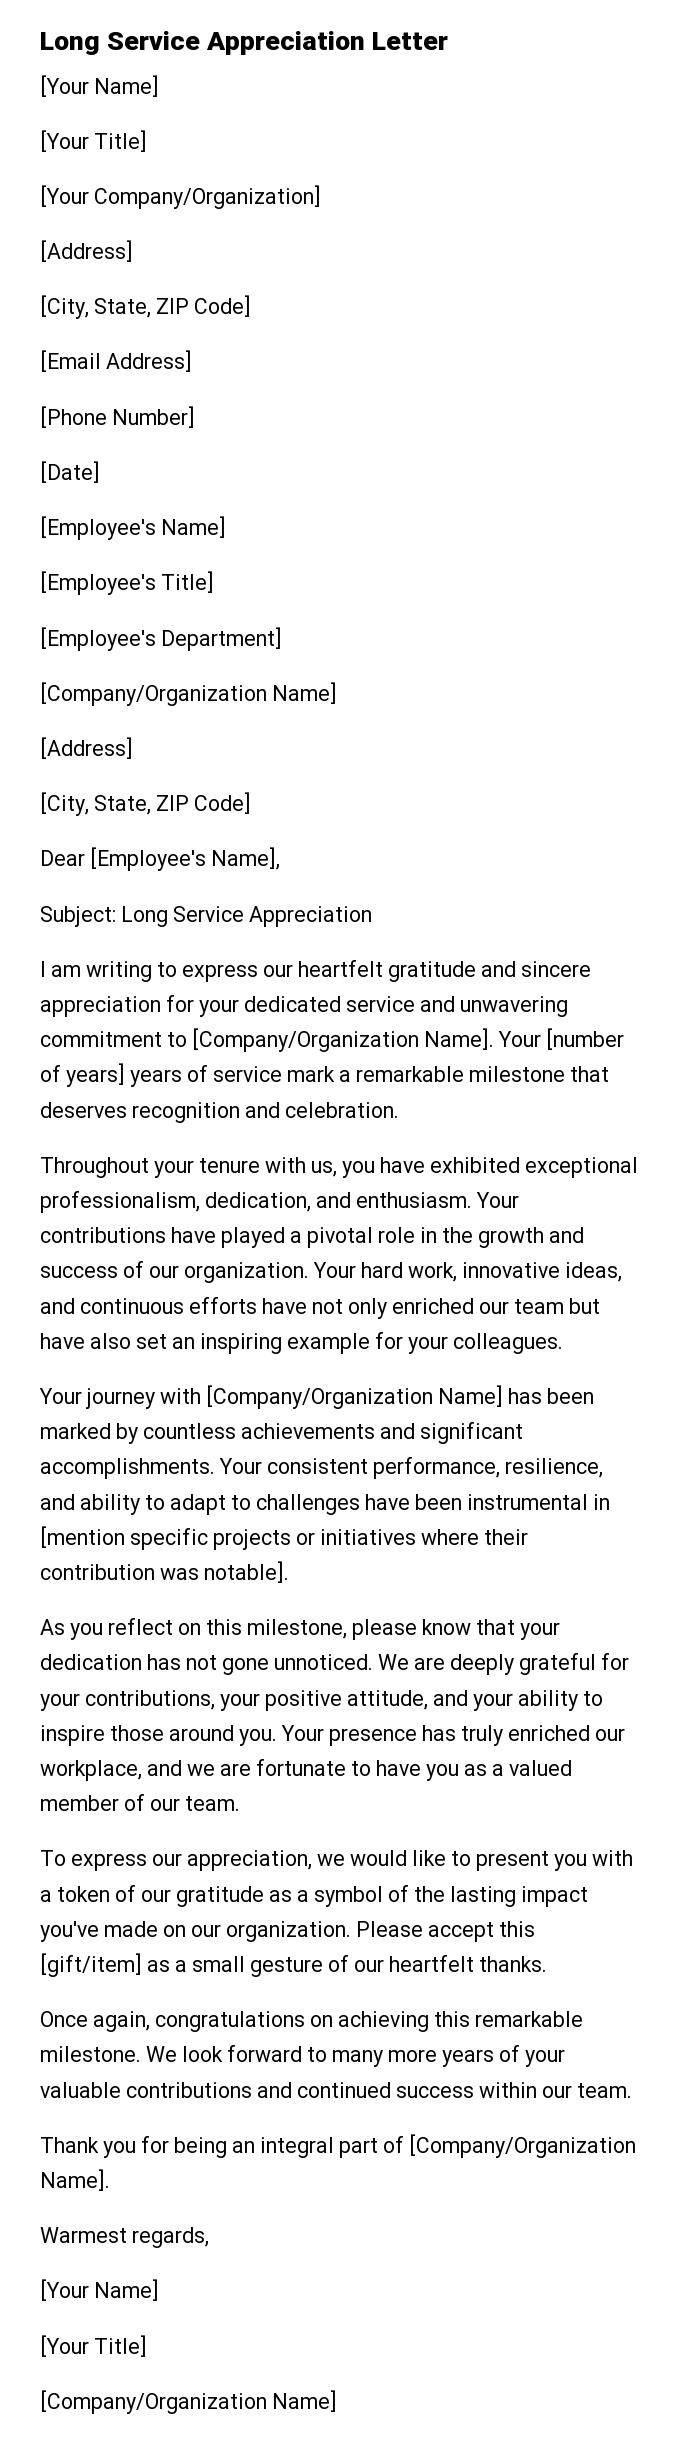 Long Service Appreciation Letter